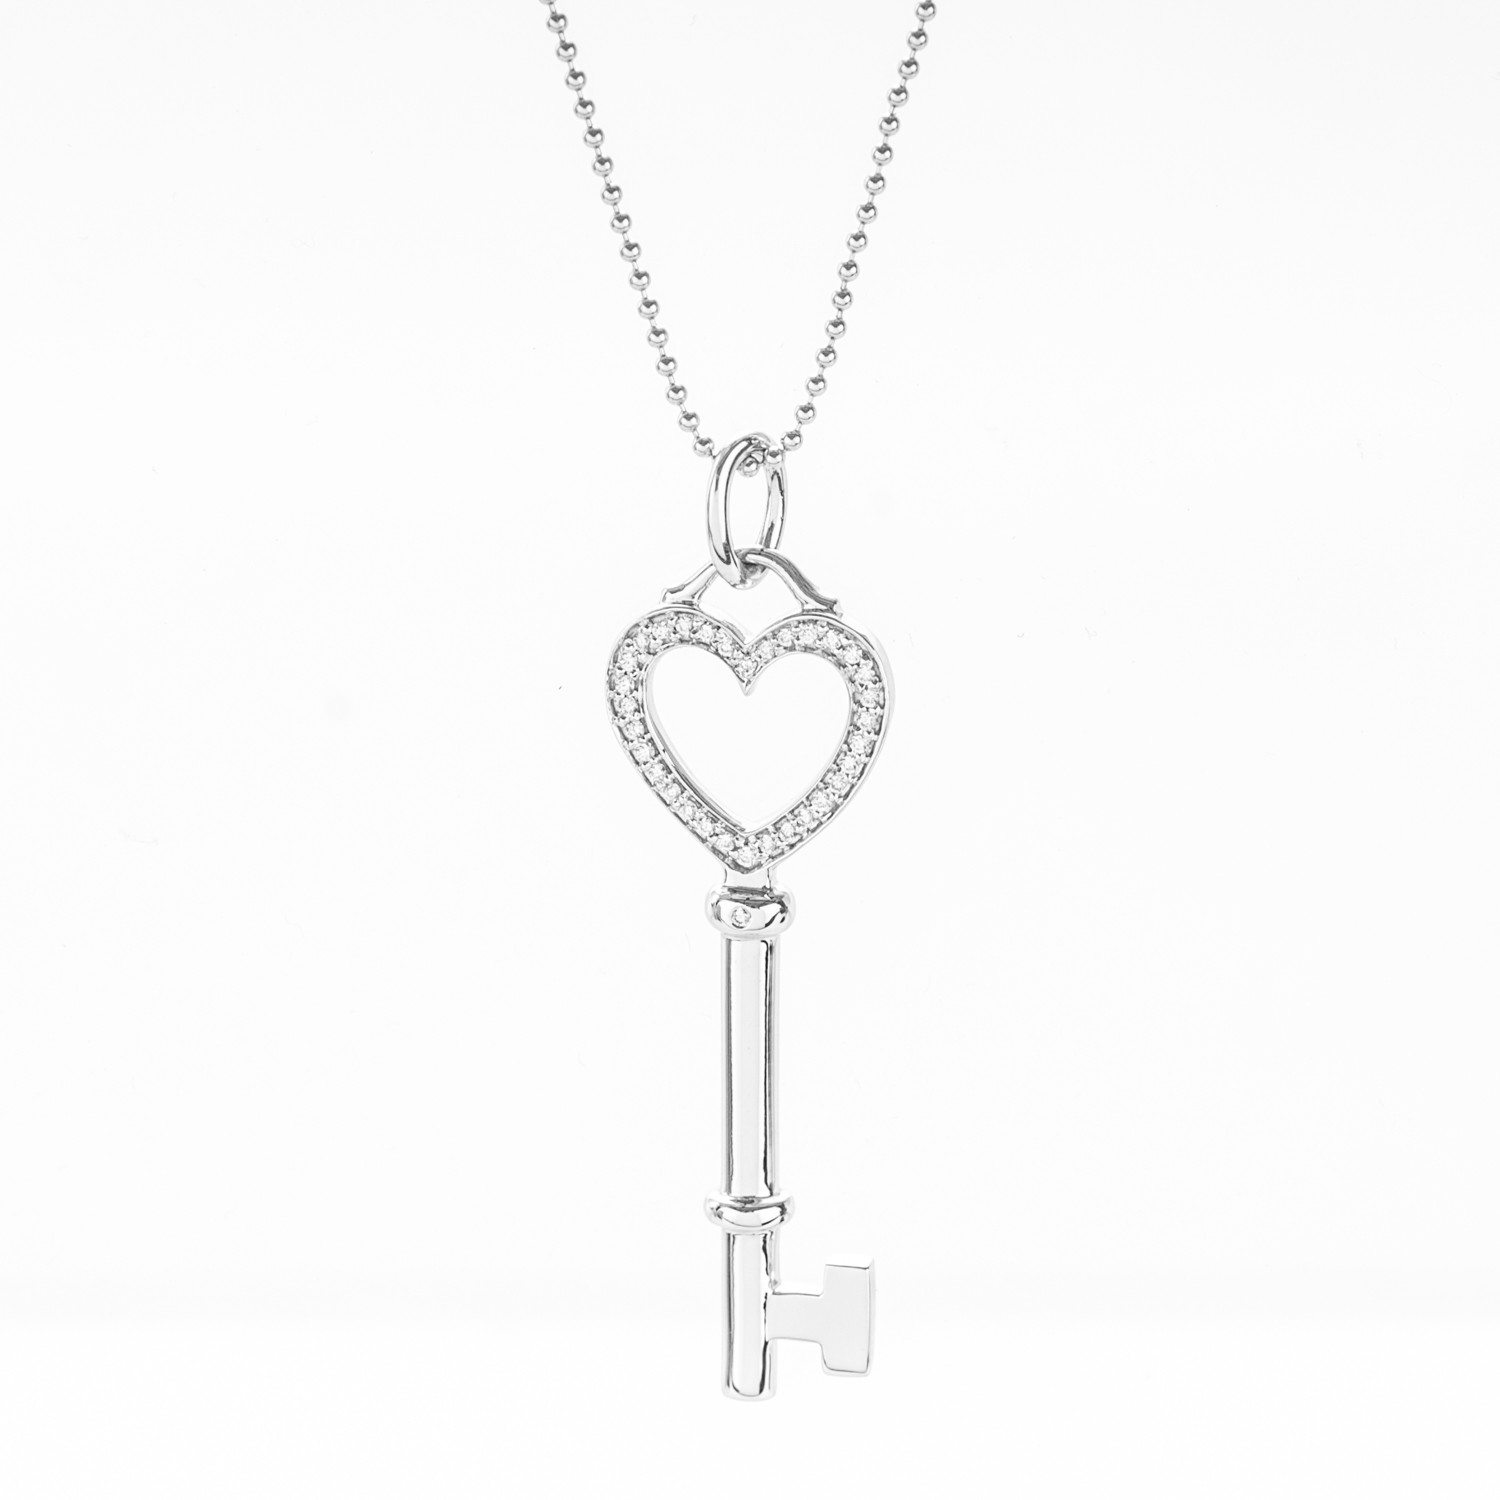 TIFFANY 18K White Gold Diamond Heart Key Charm Pendant Necklace 178948